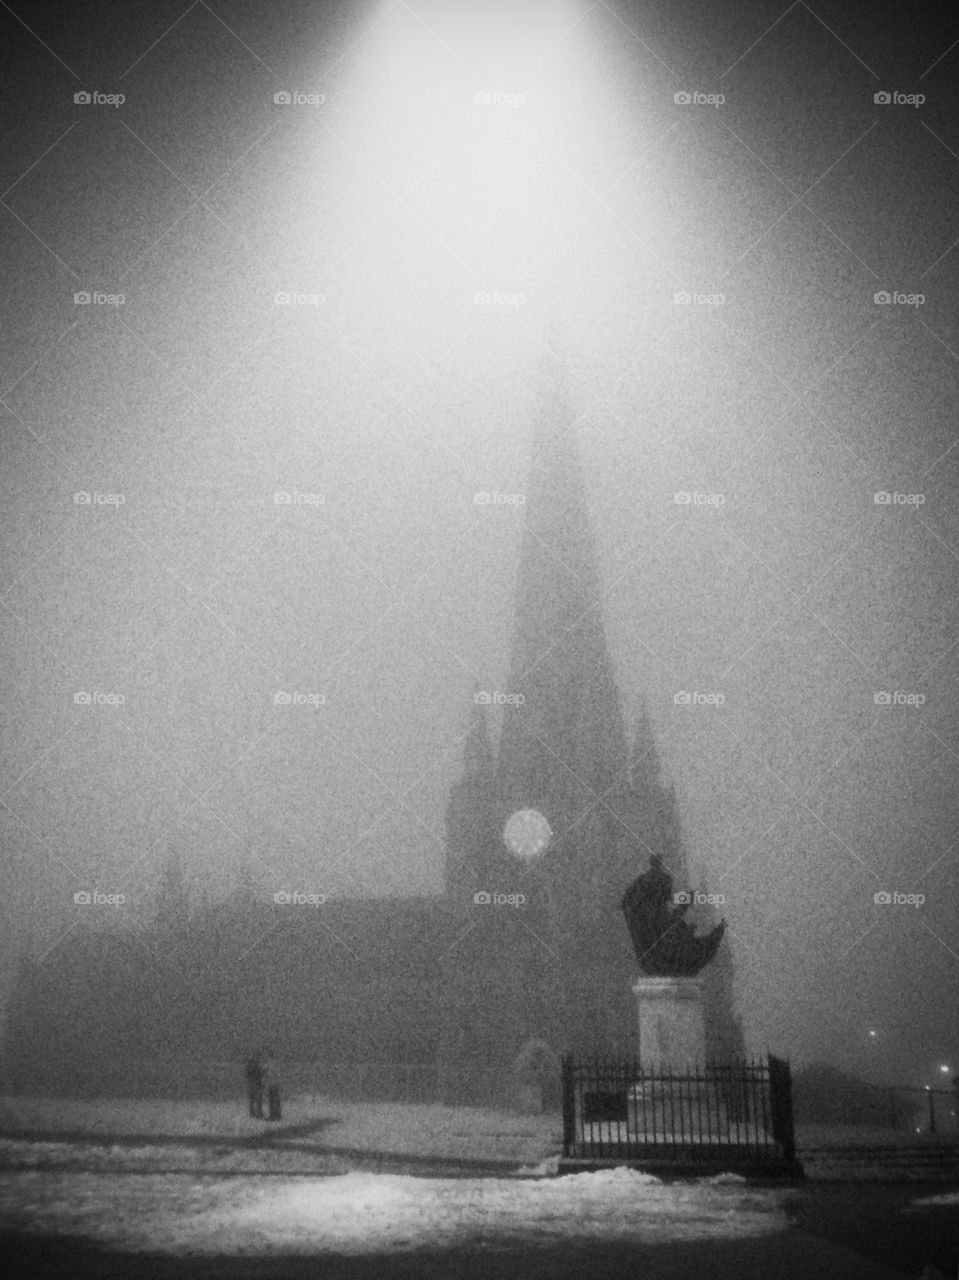 A church scene viewed at night through the mist.